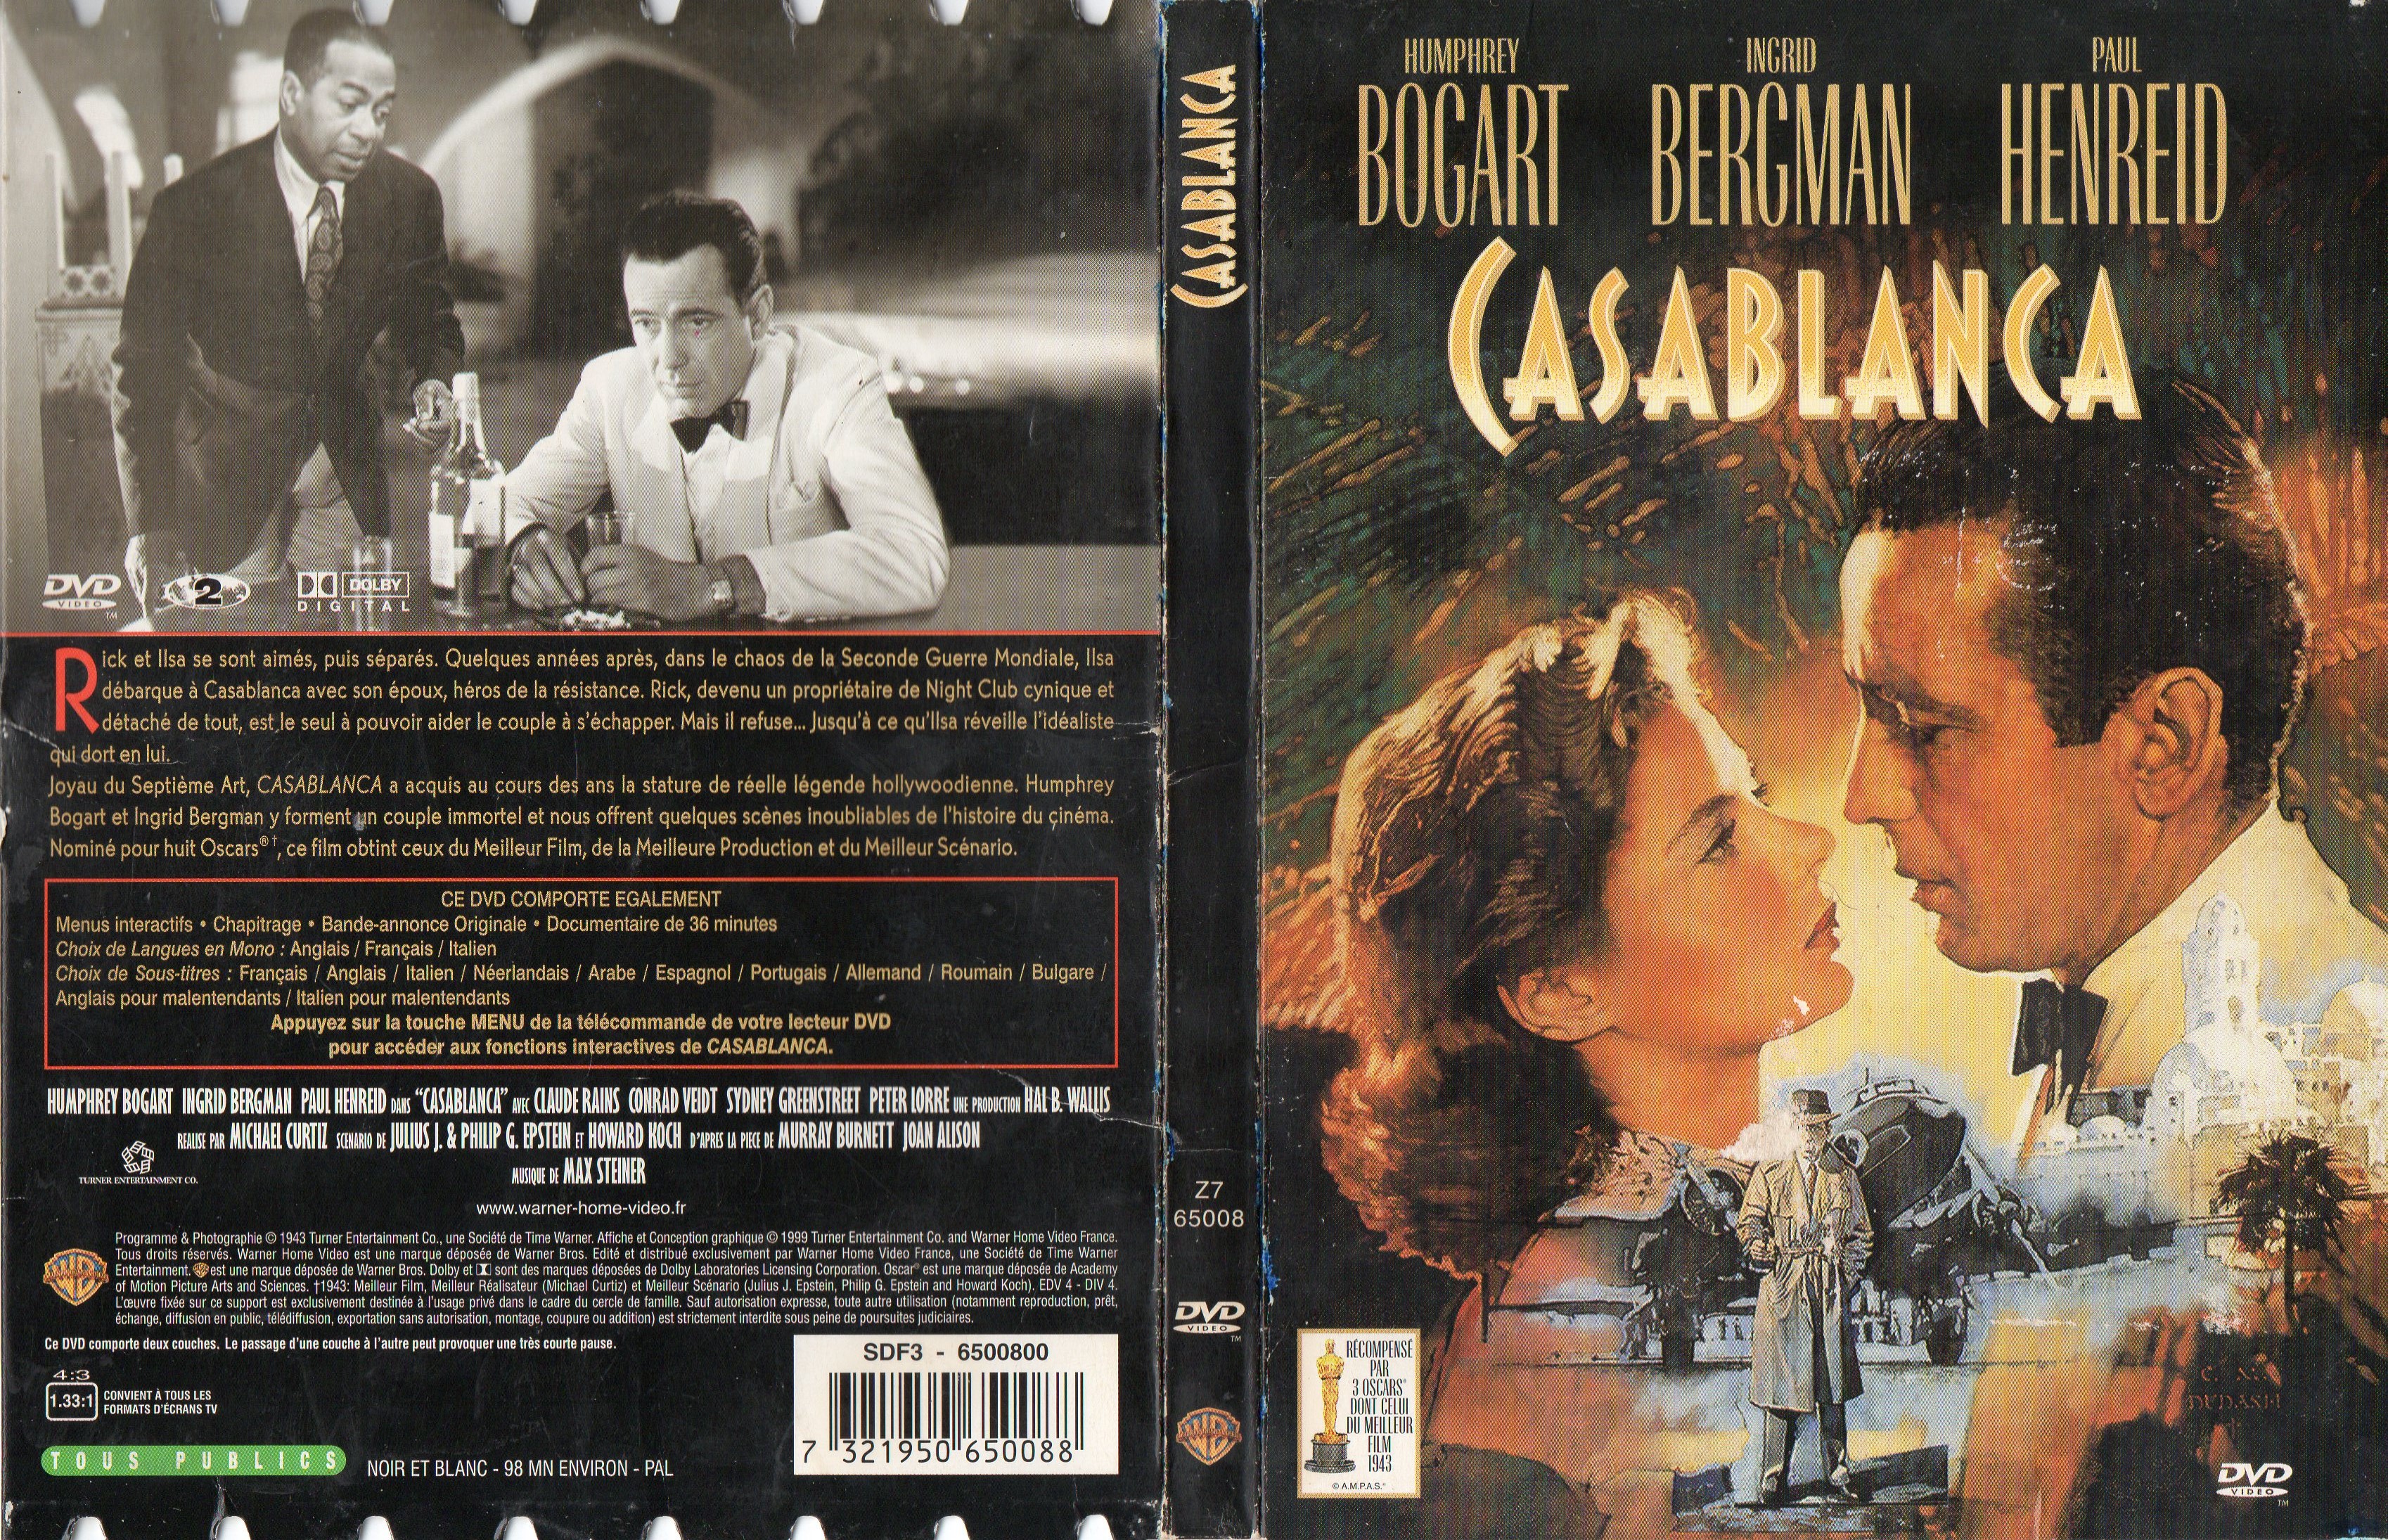 Jaquette DVD Casablanca v5